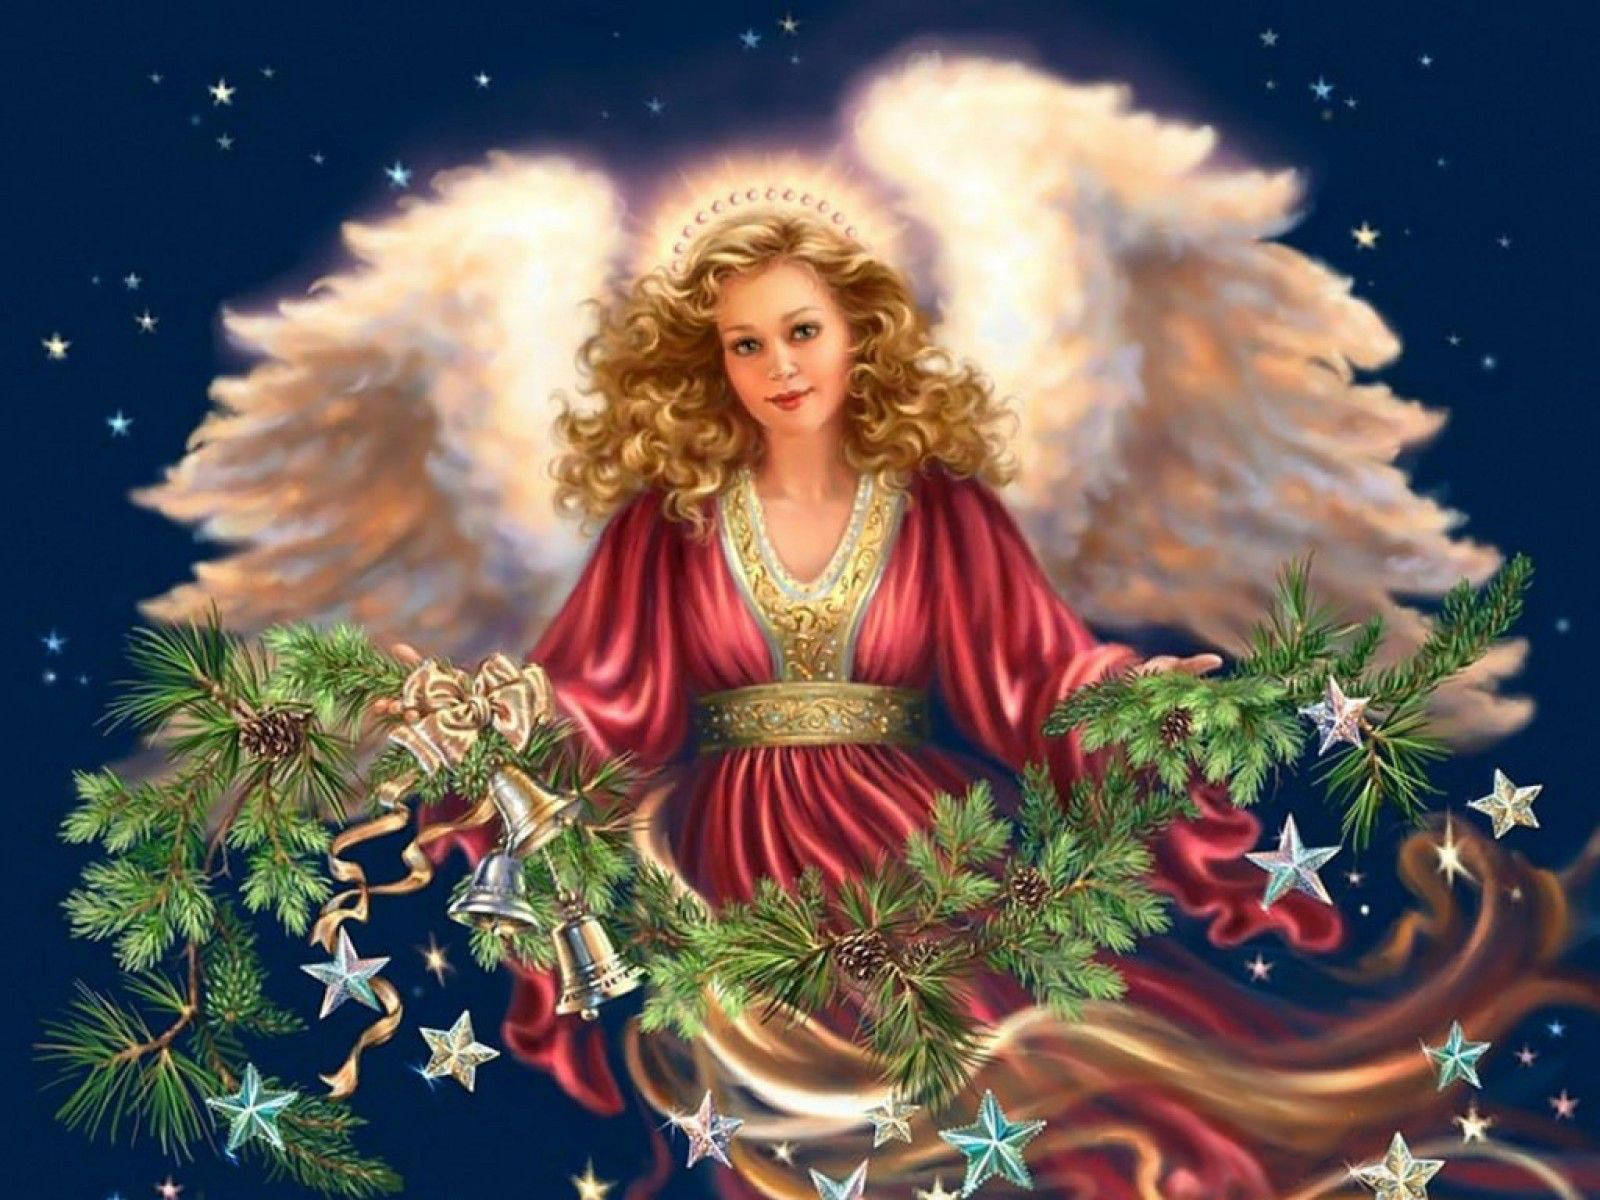 Divine Christmas Angel